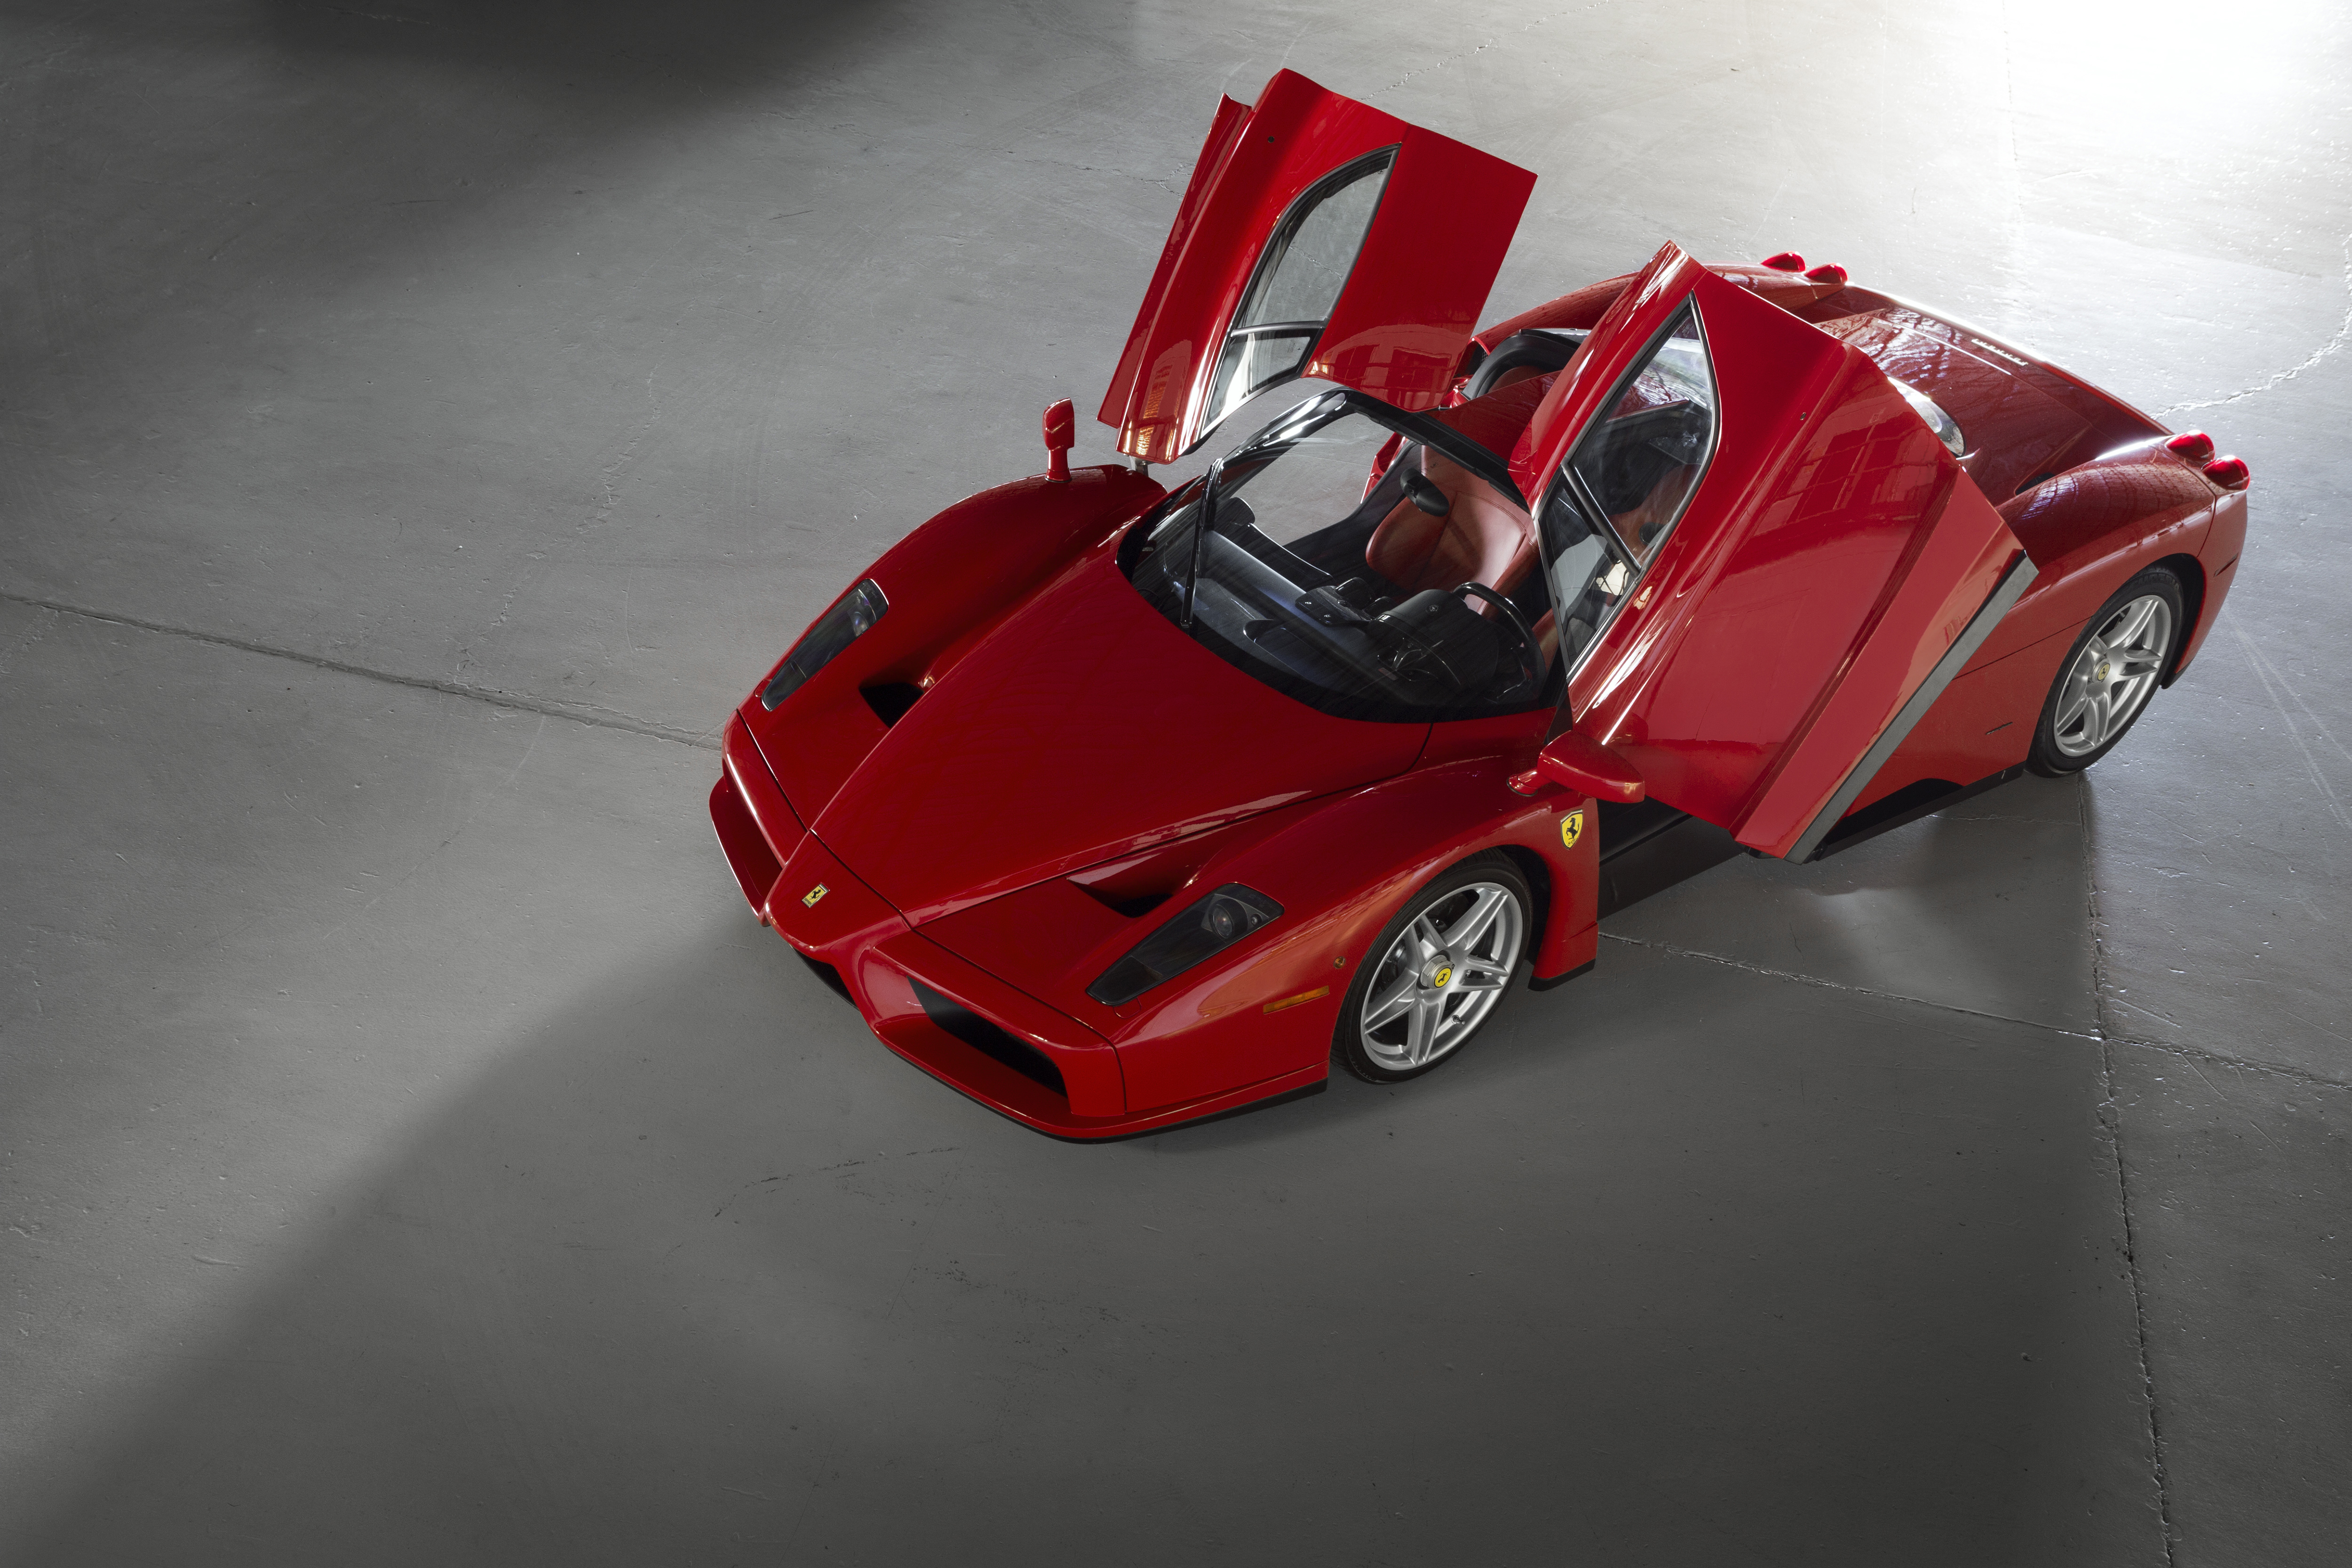 General 5000x3333 Ferrari Enzo Ferrari red cars sports car italian cars car vehicle scissor doors Stellantis